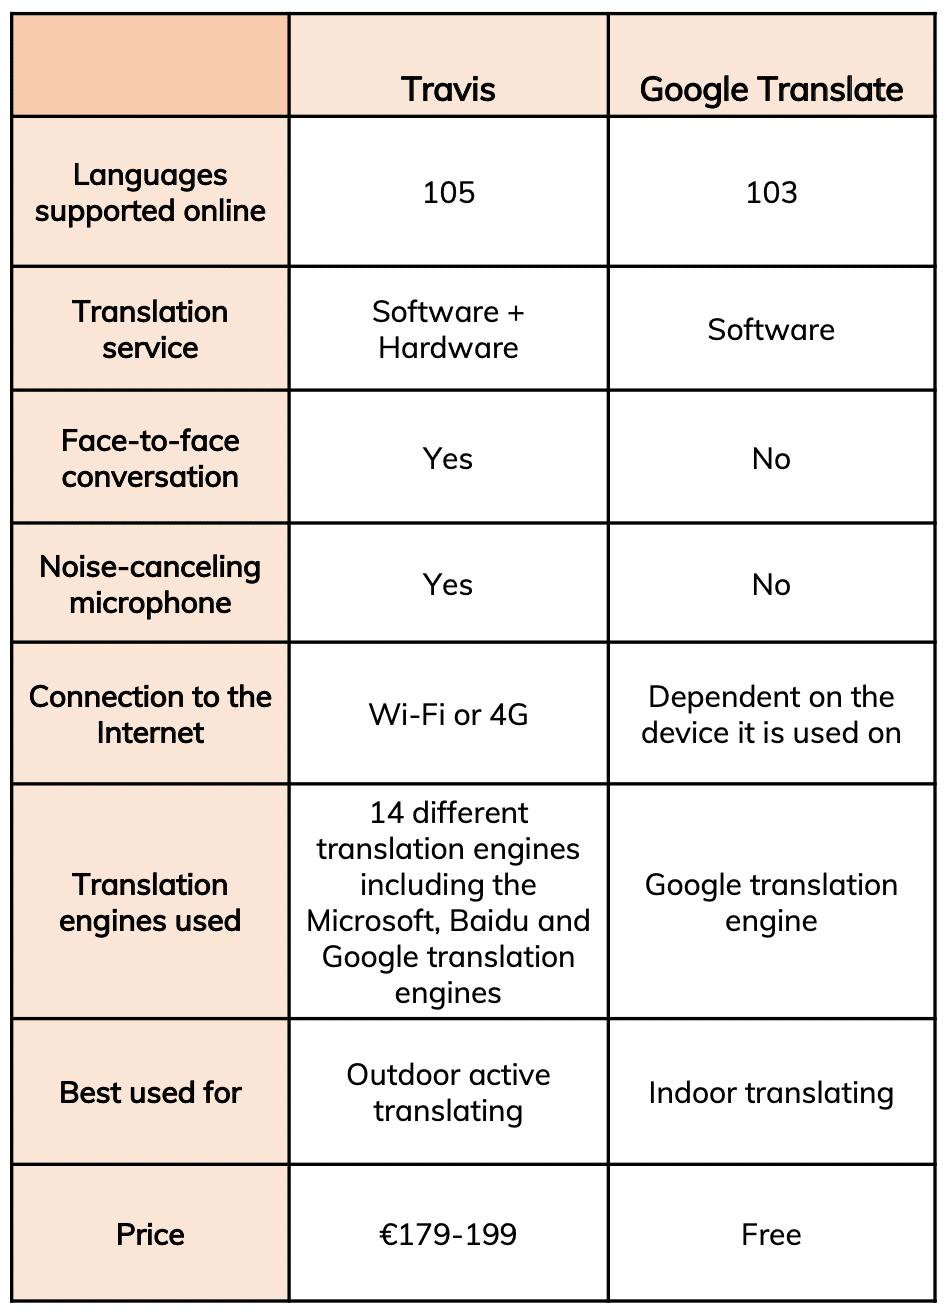 Travis vs Google Translate comparison table